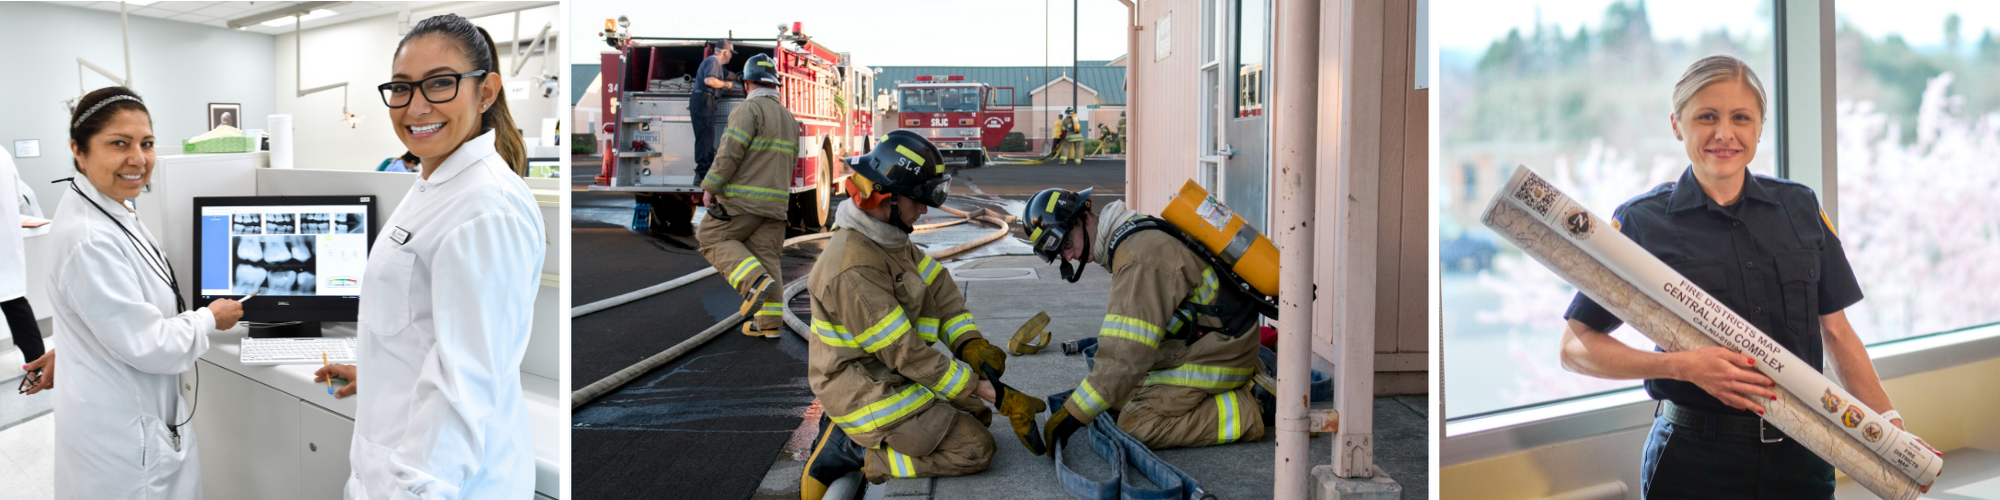 dental students, firefighers, fire technology student